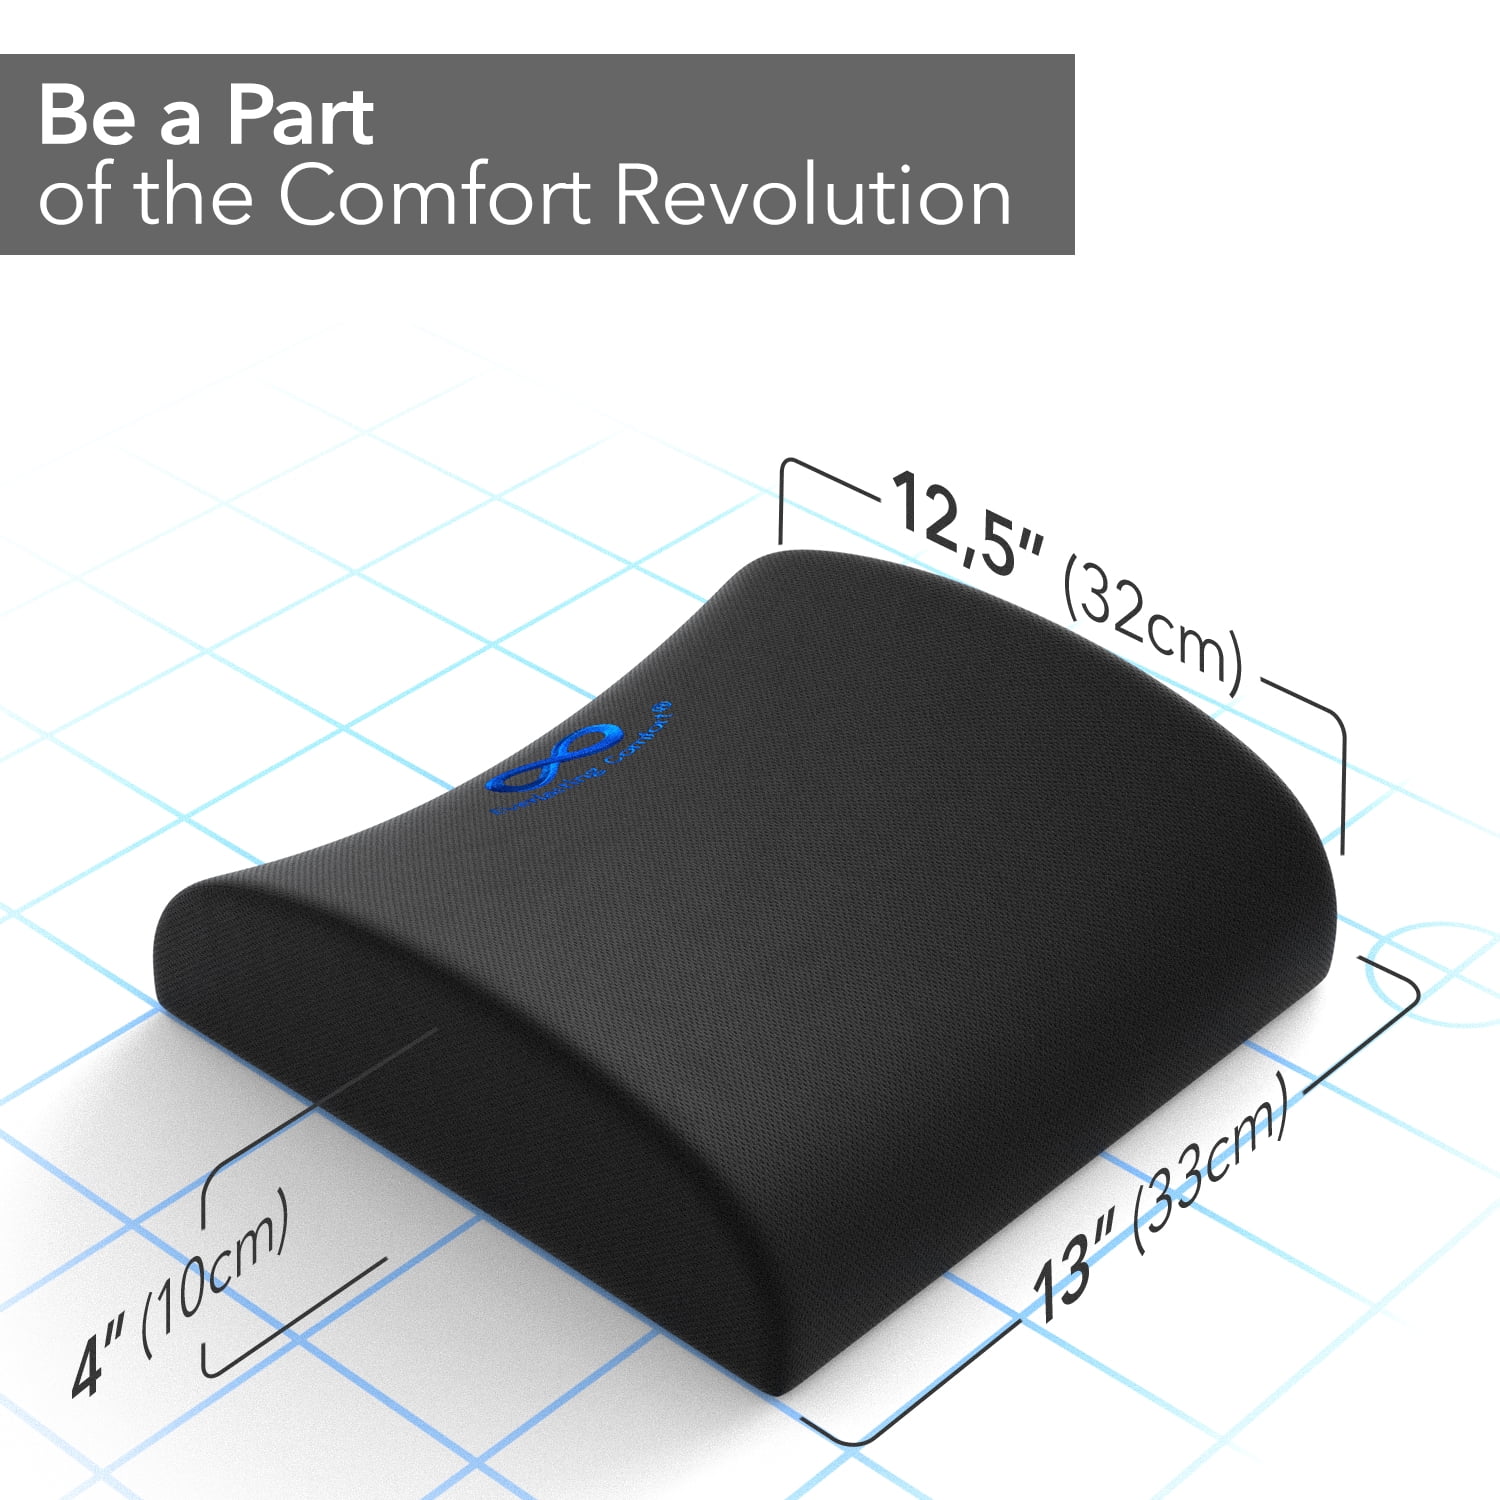 Back Cushion: Gel Infused Lumbar Support – Everlasting Comfort